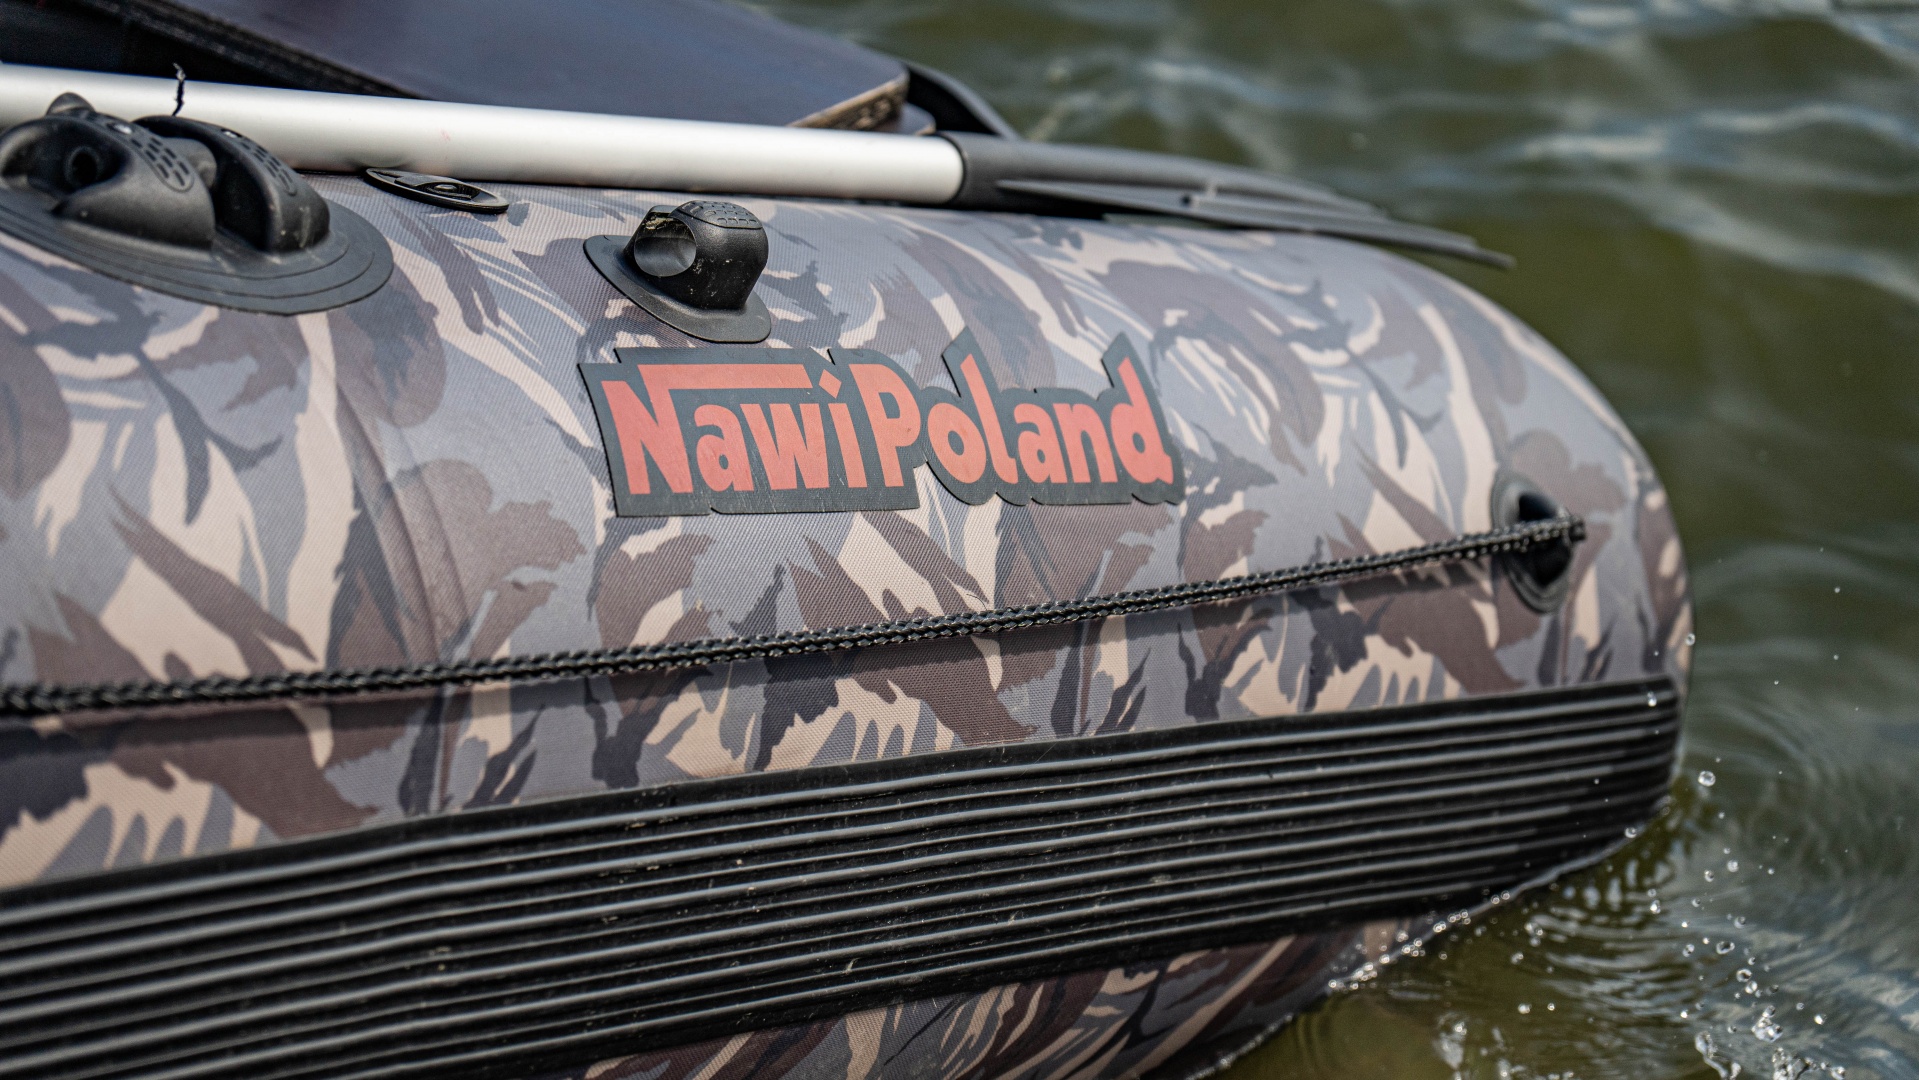 NawiPoland CAT 300 Inflatable Boat  - Katamarán